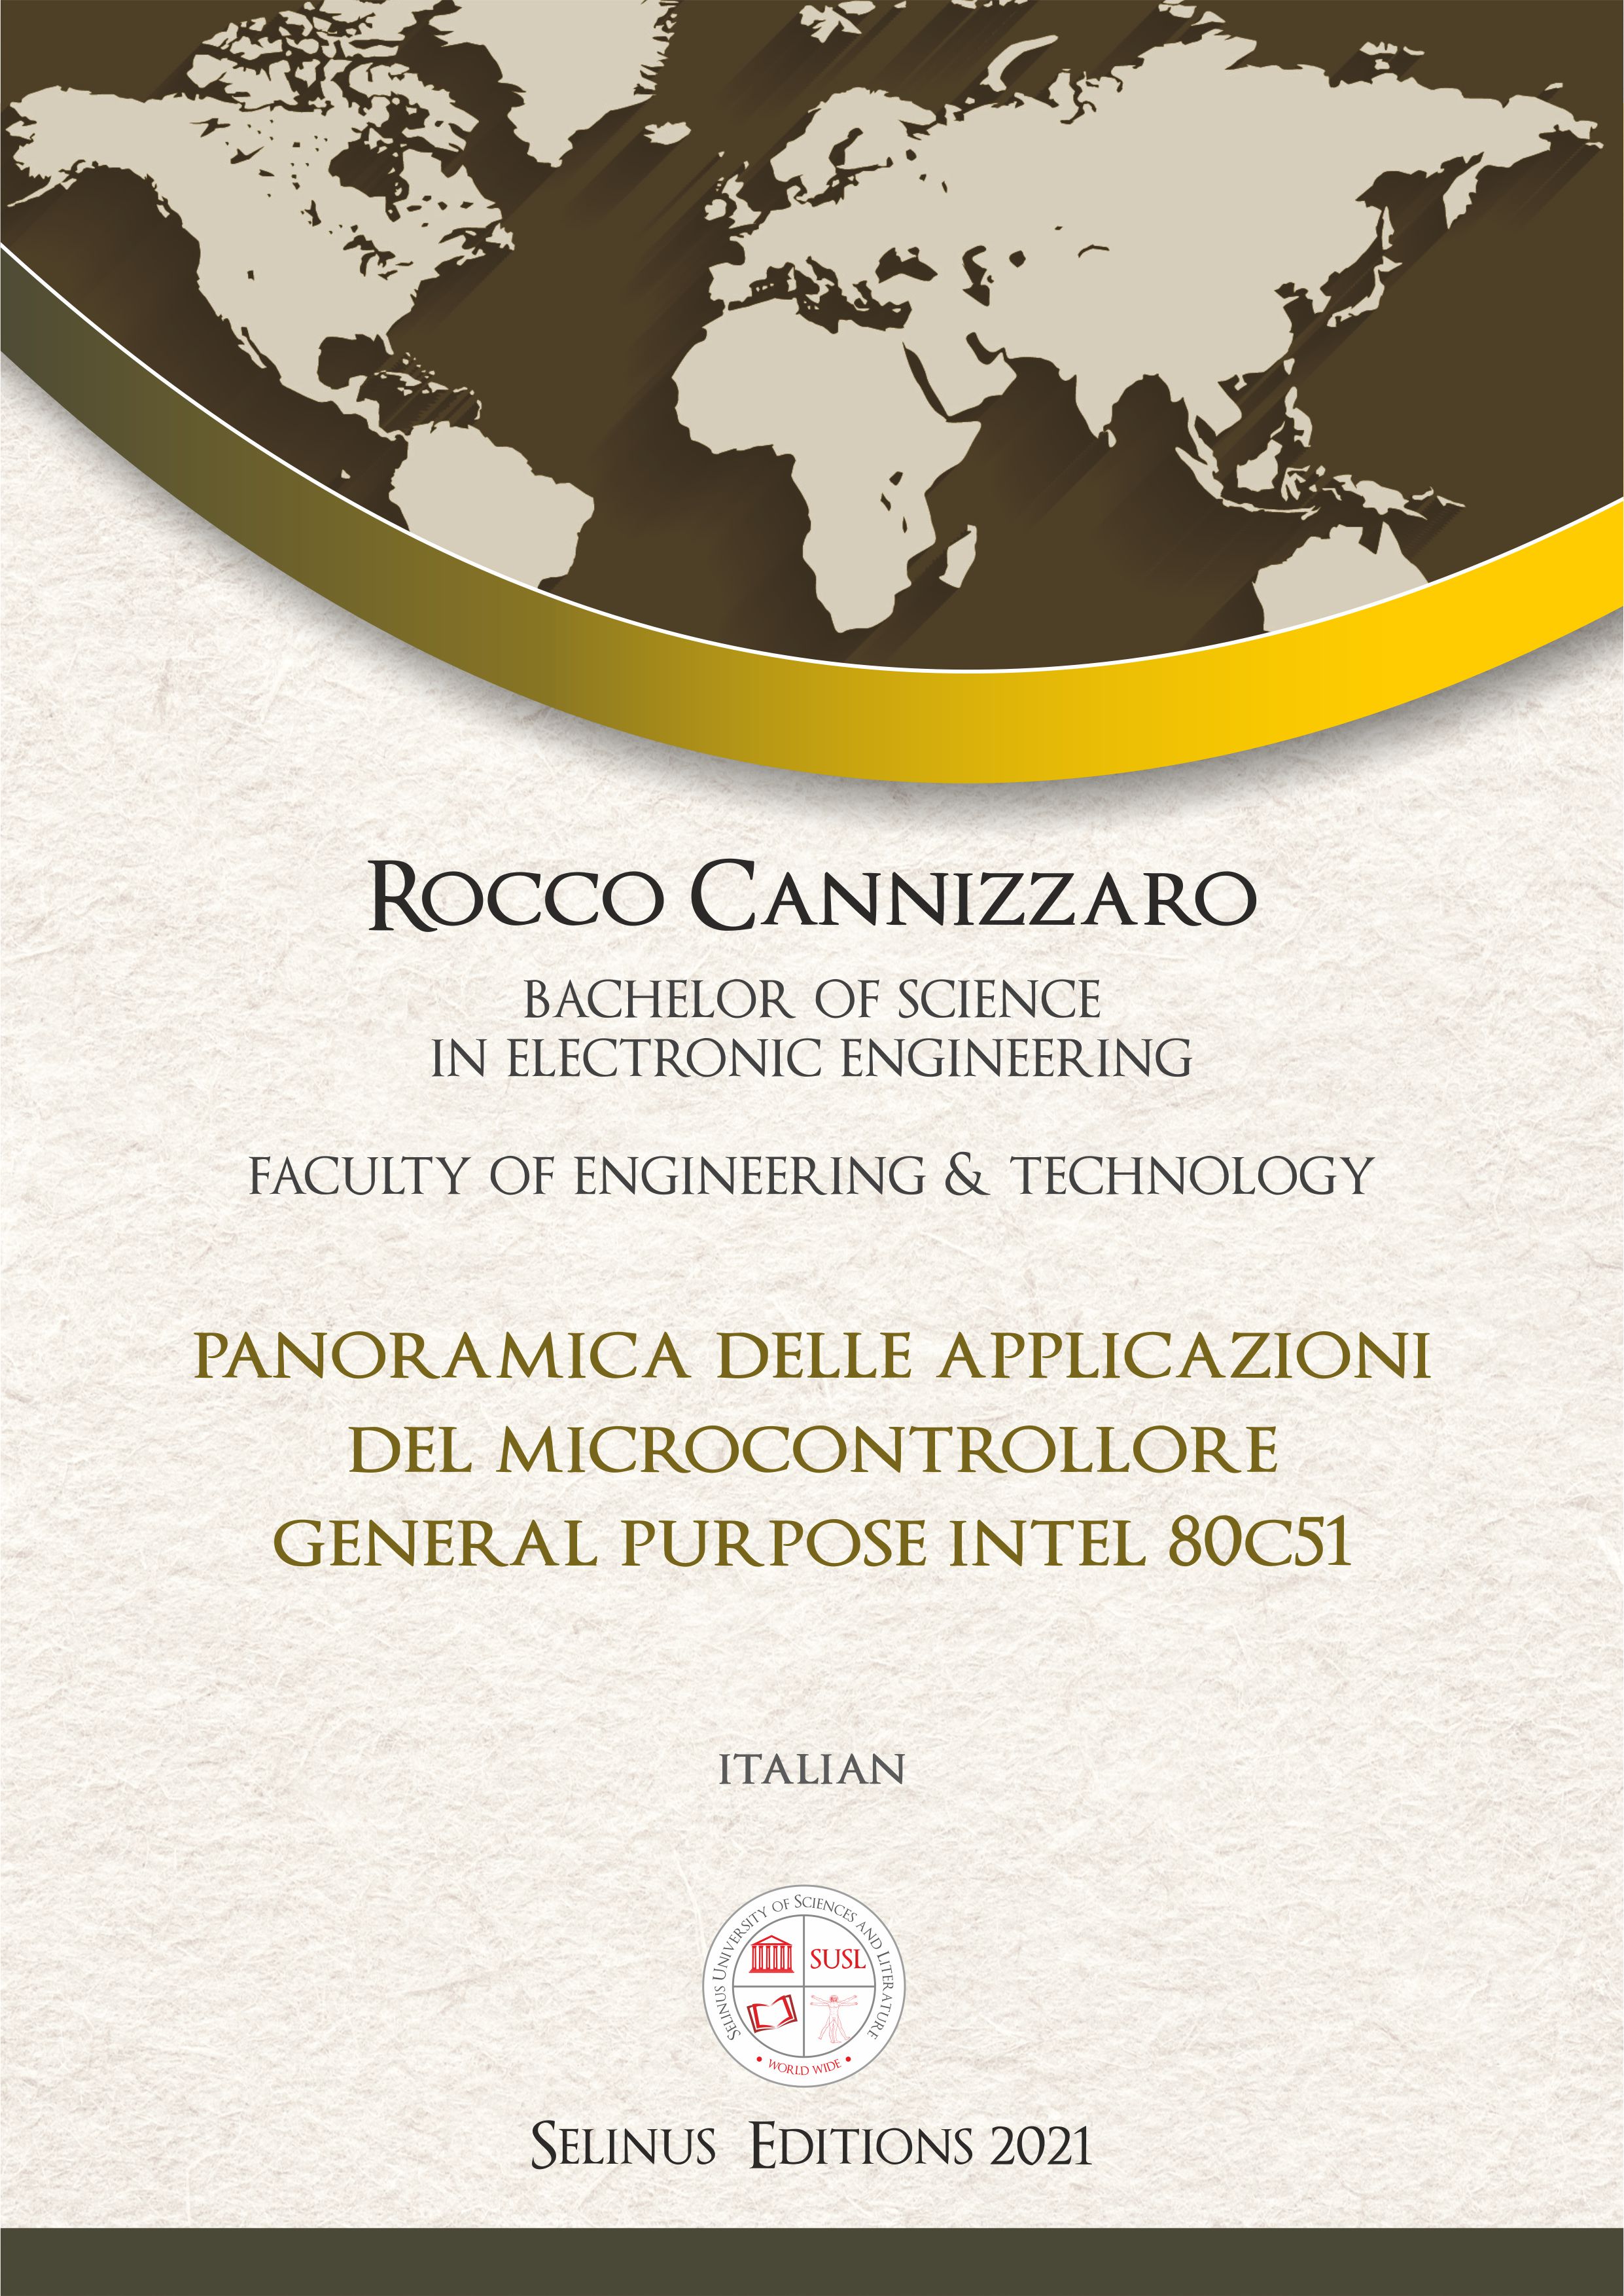 Thesis Rocco Cannizzaro